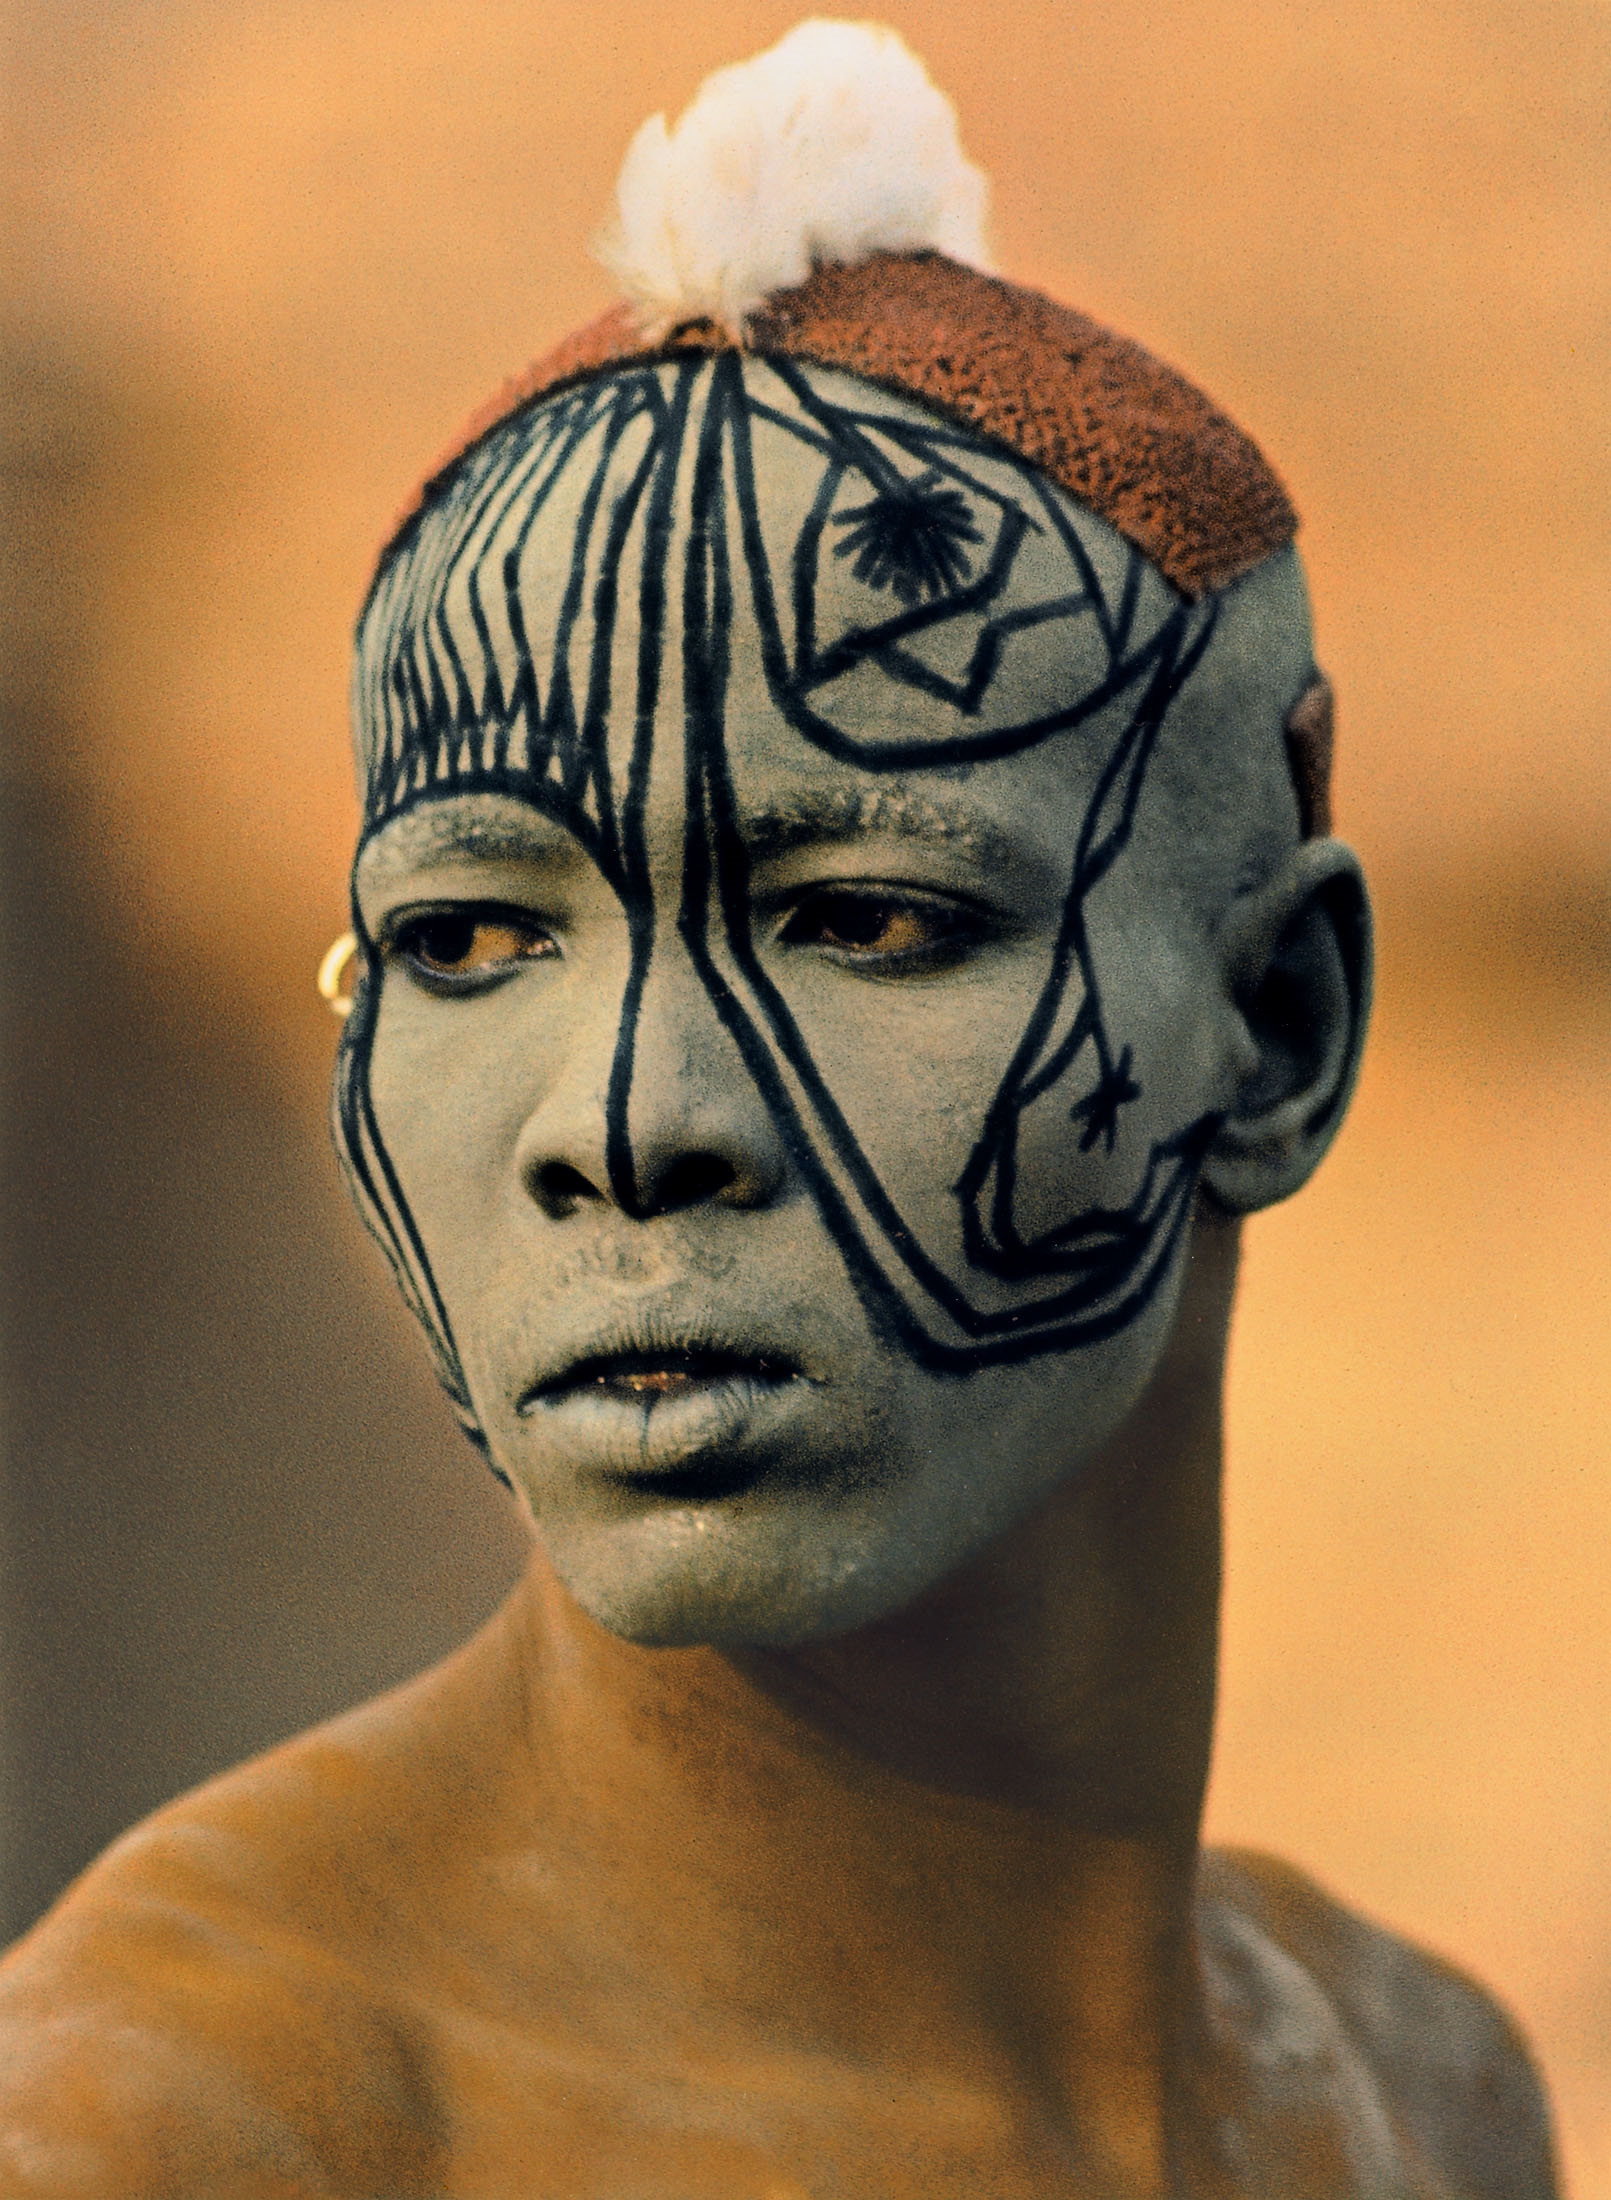 Maske (Nuba) by Leni Riefenstahl, 1975